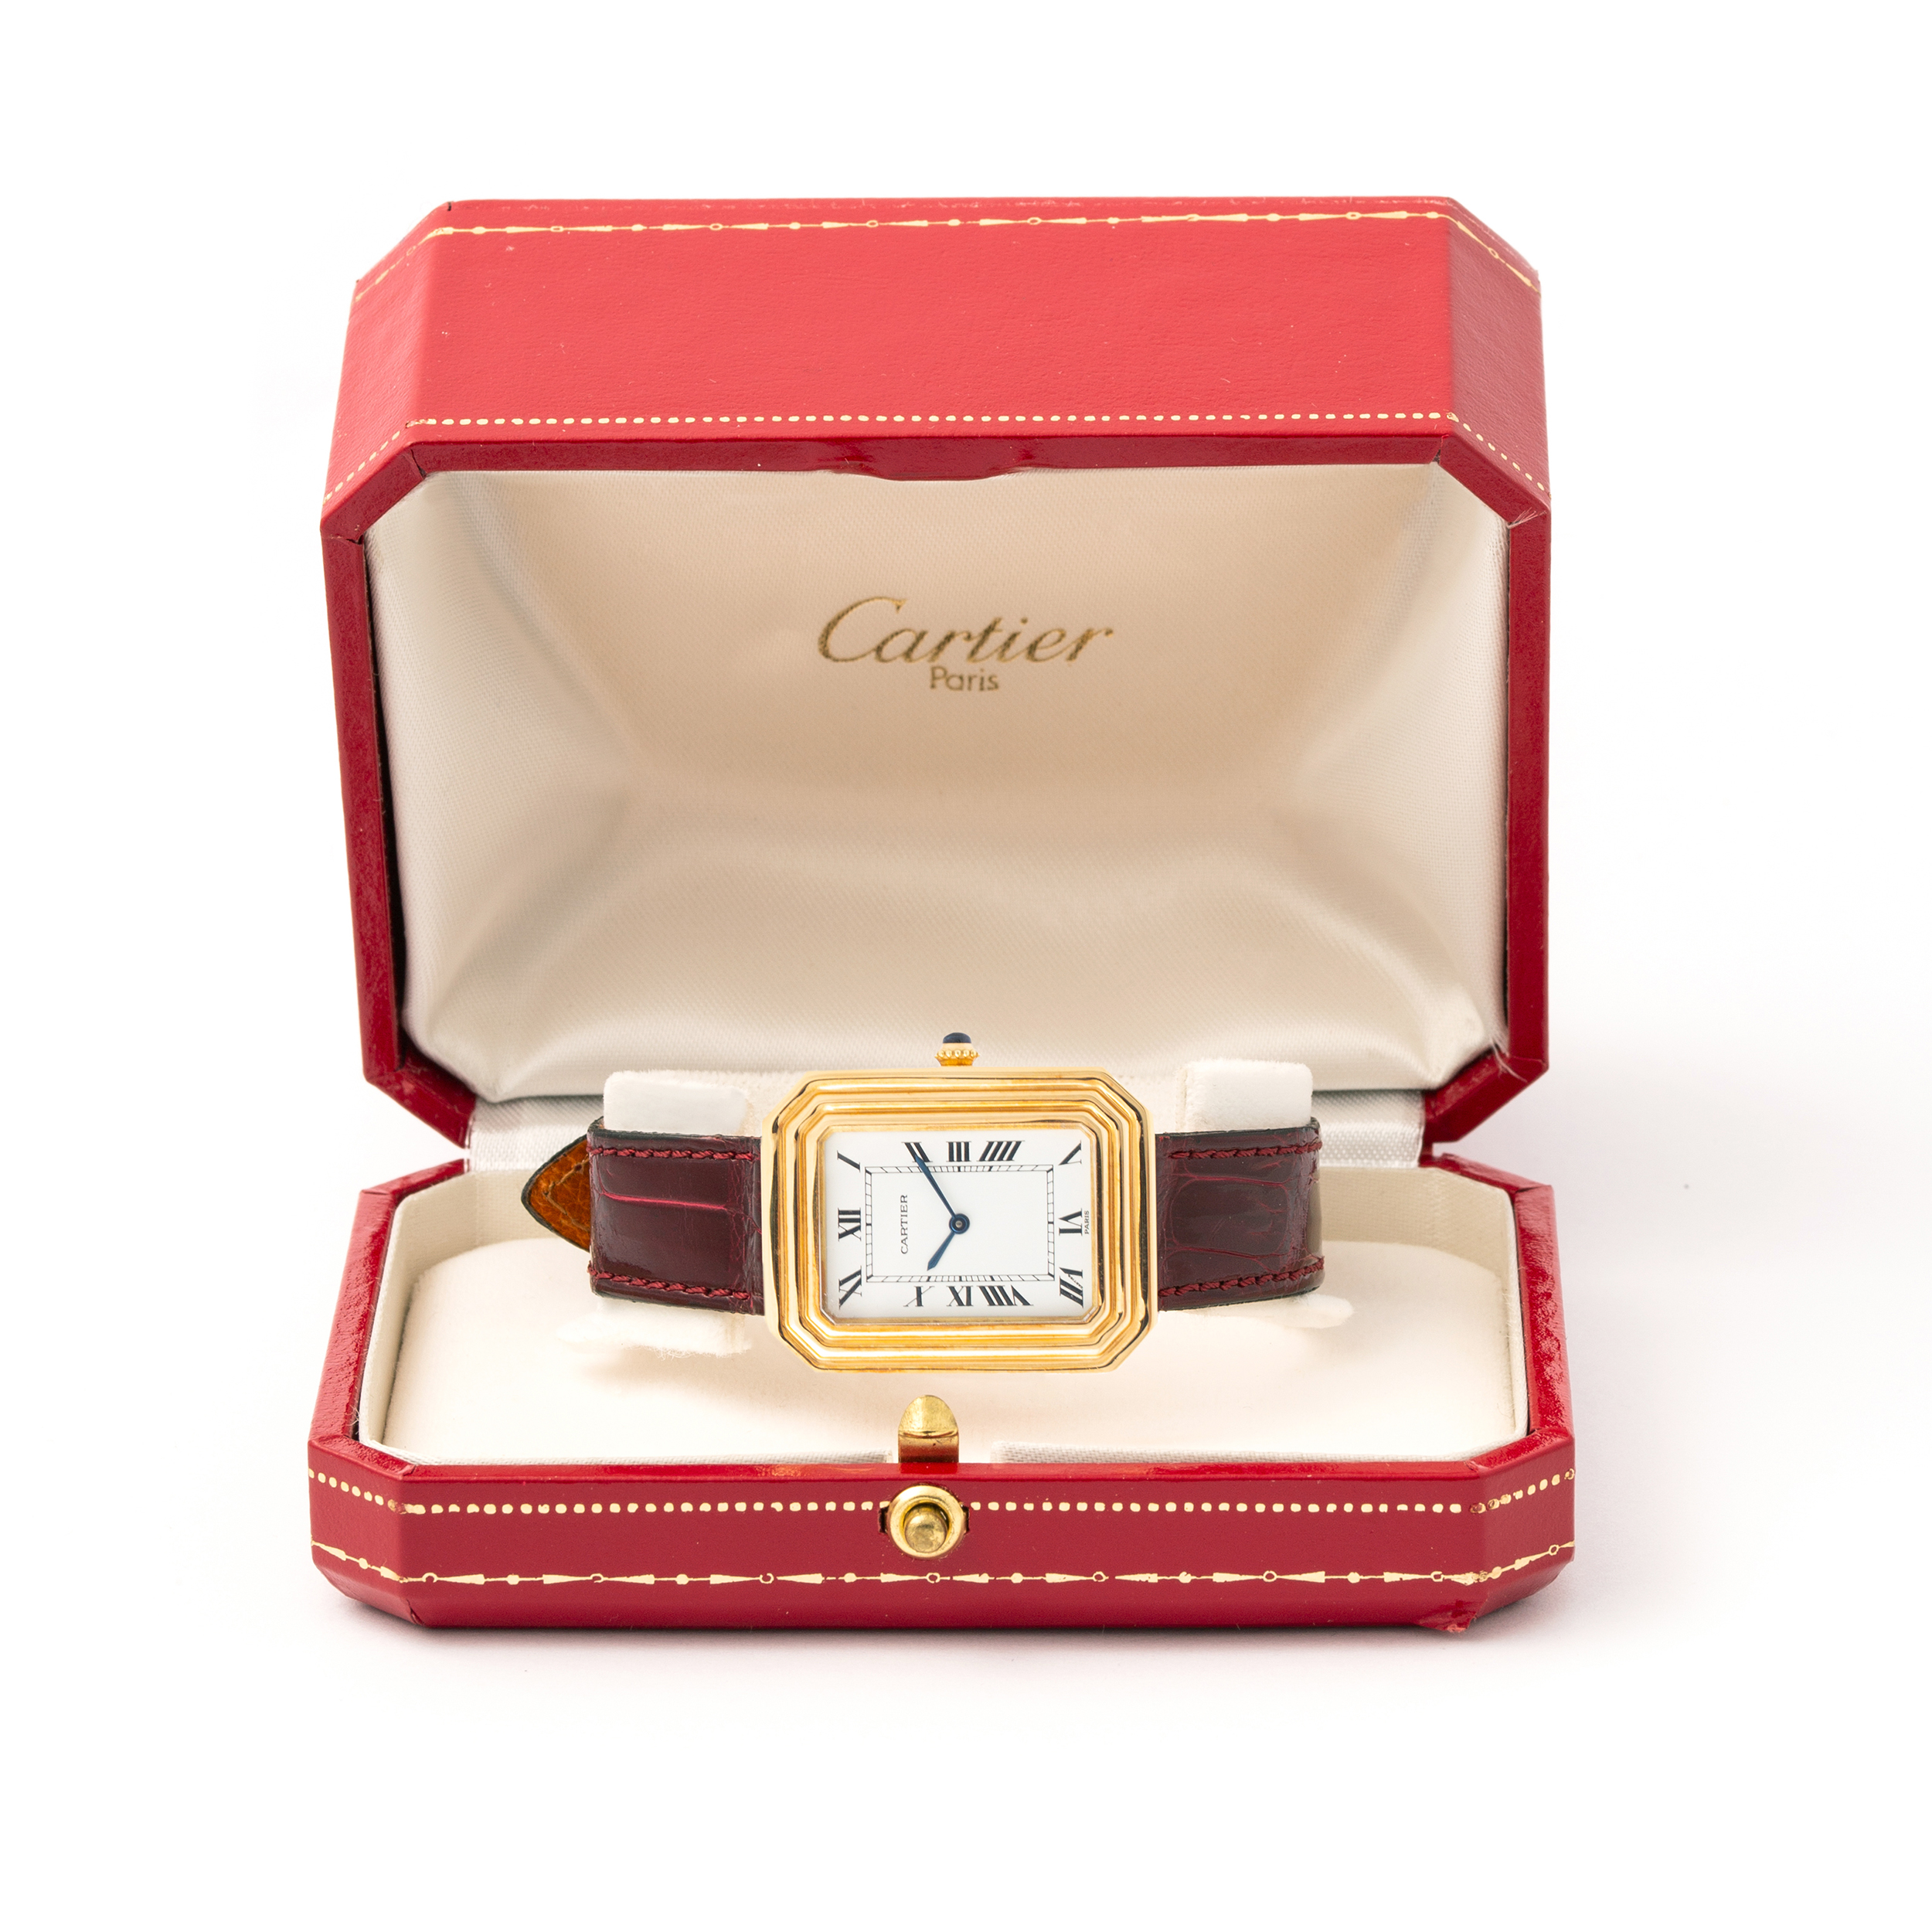 20c698_7-cartier-paris-cristallor-18k-gold-wristwatch